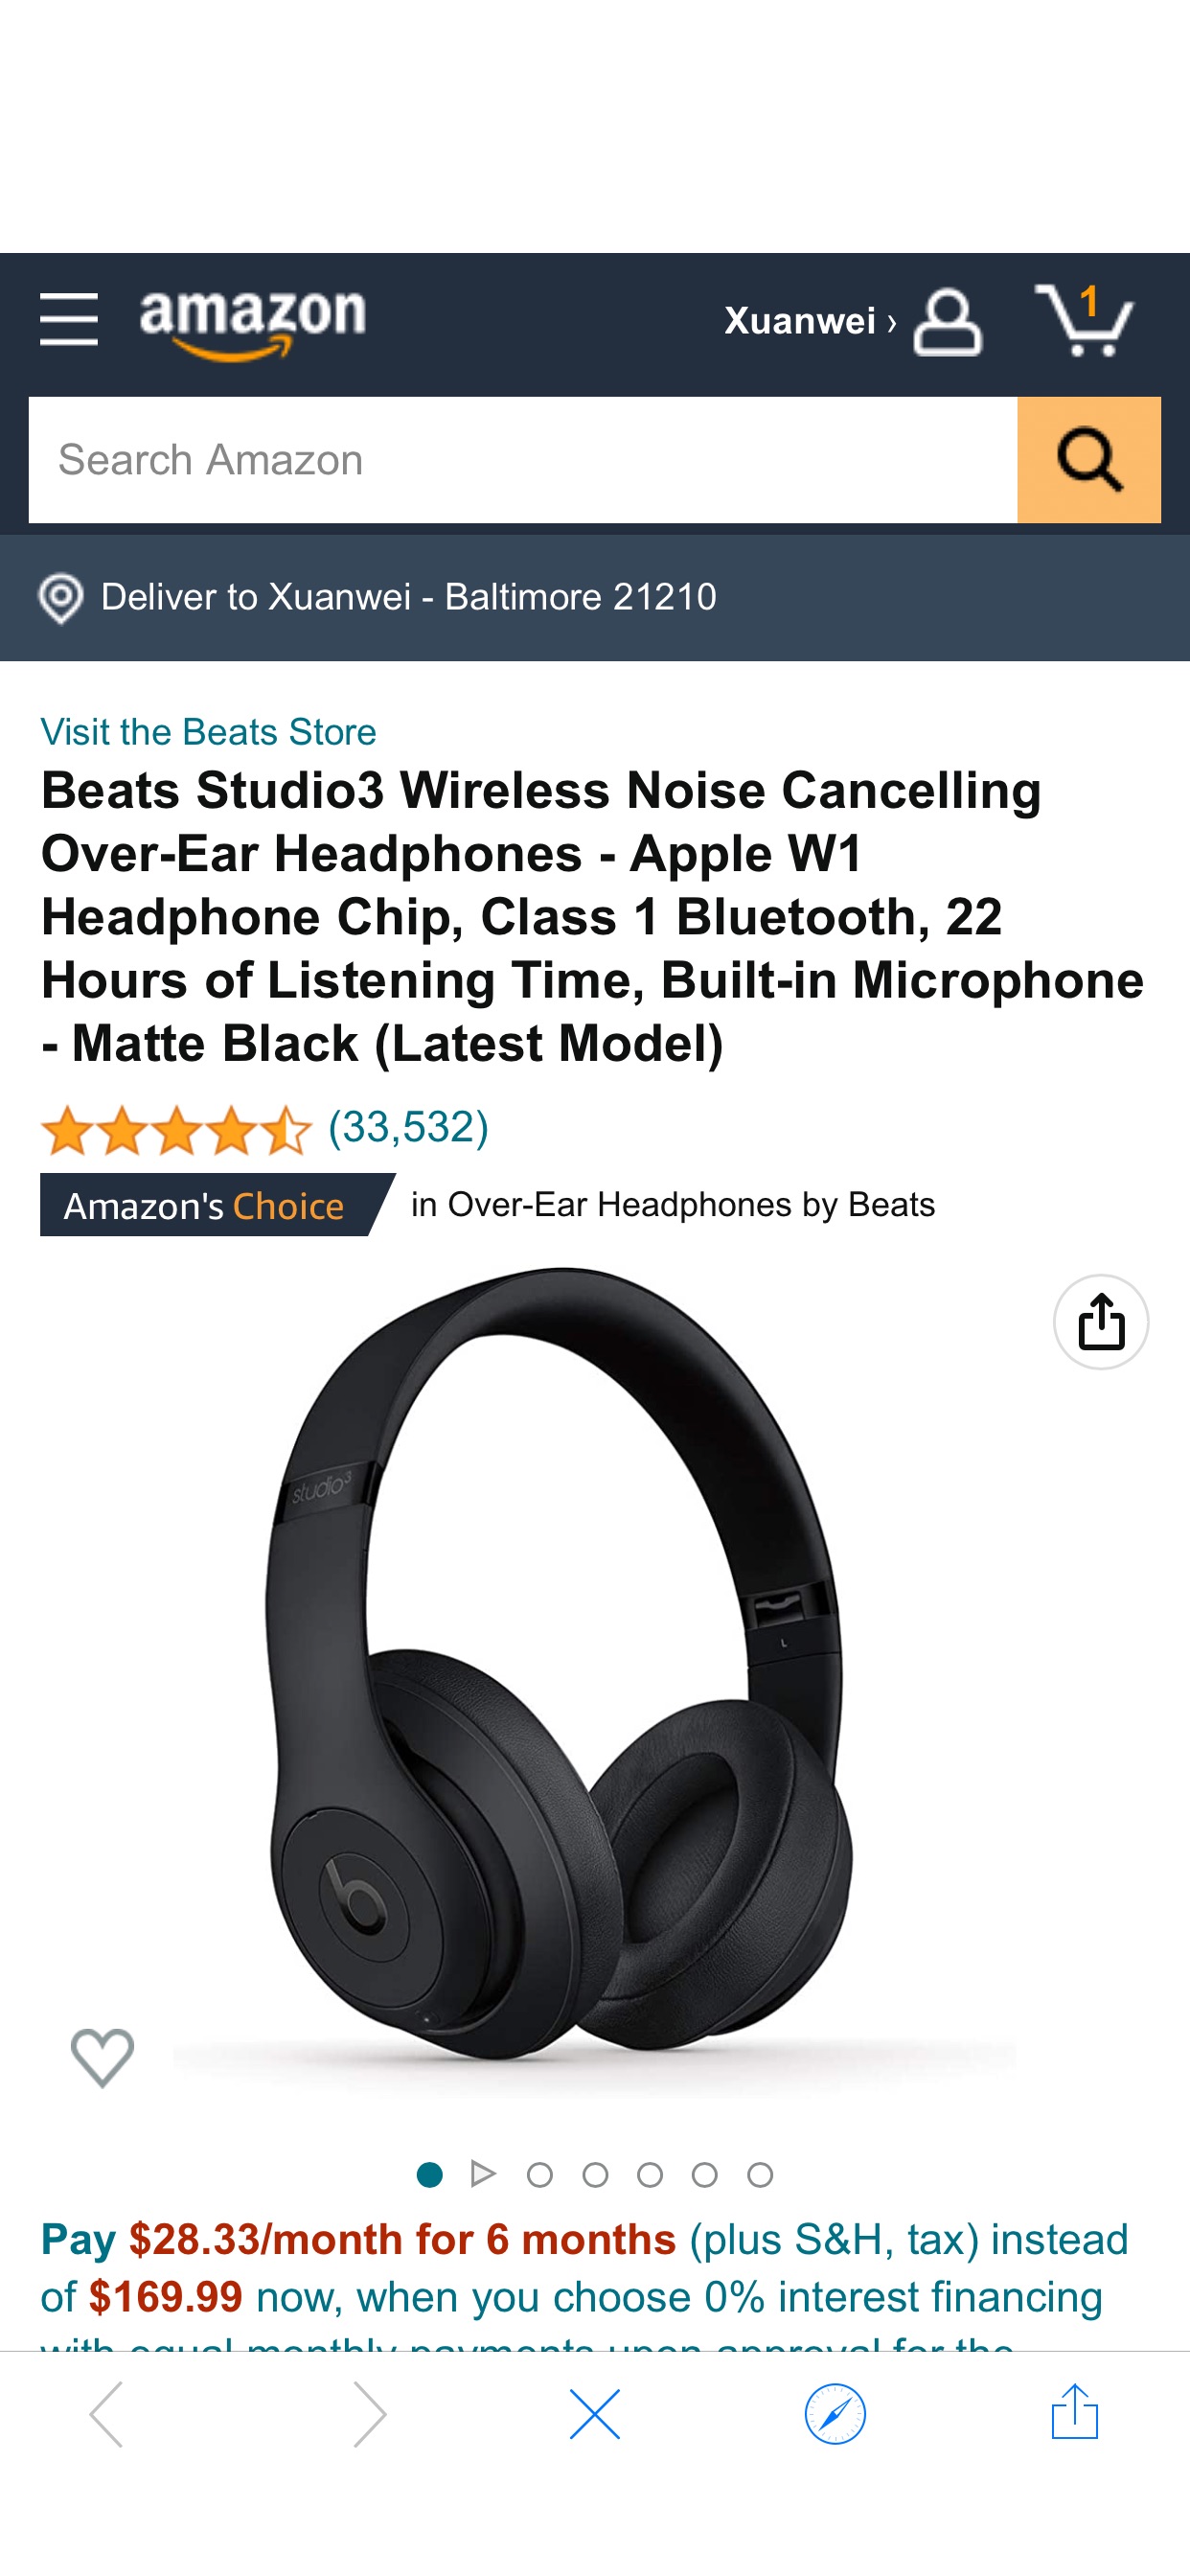 Amazon.com: Beats Studio3 Wireless Noise Cancelling Over-Ear Headphones